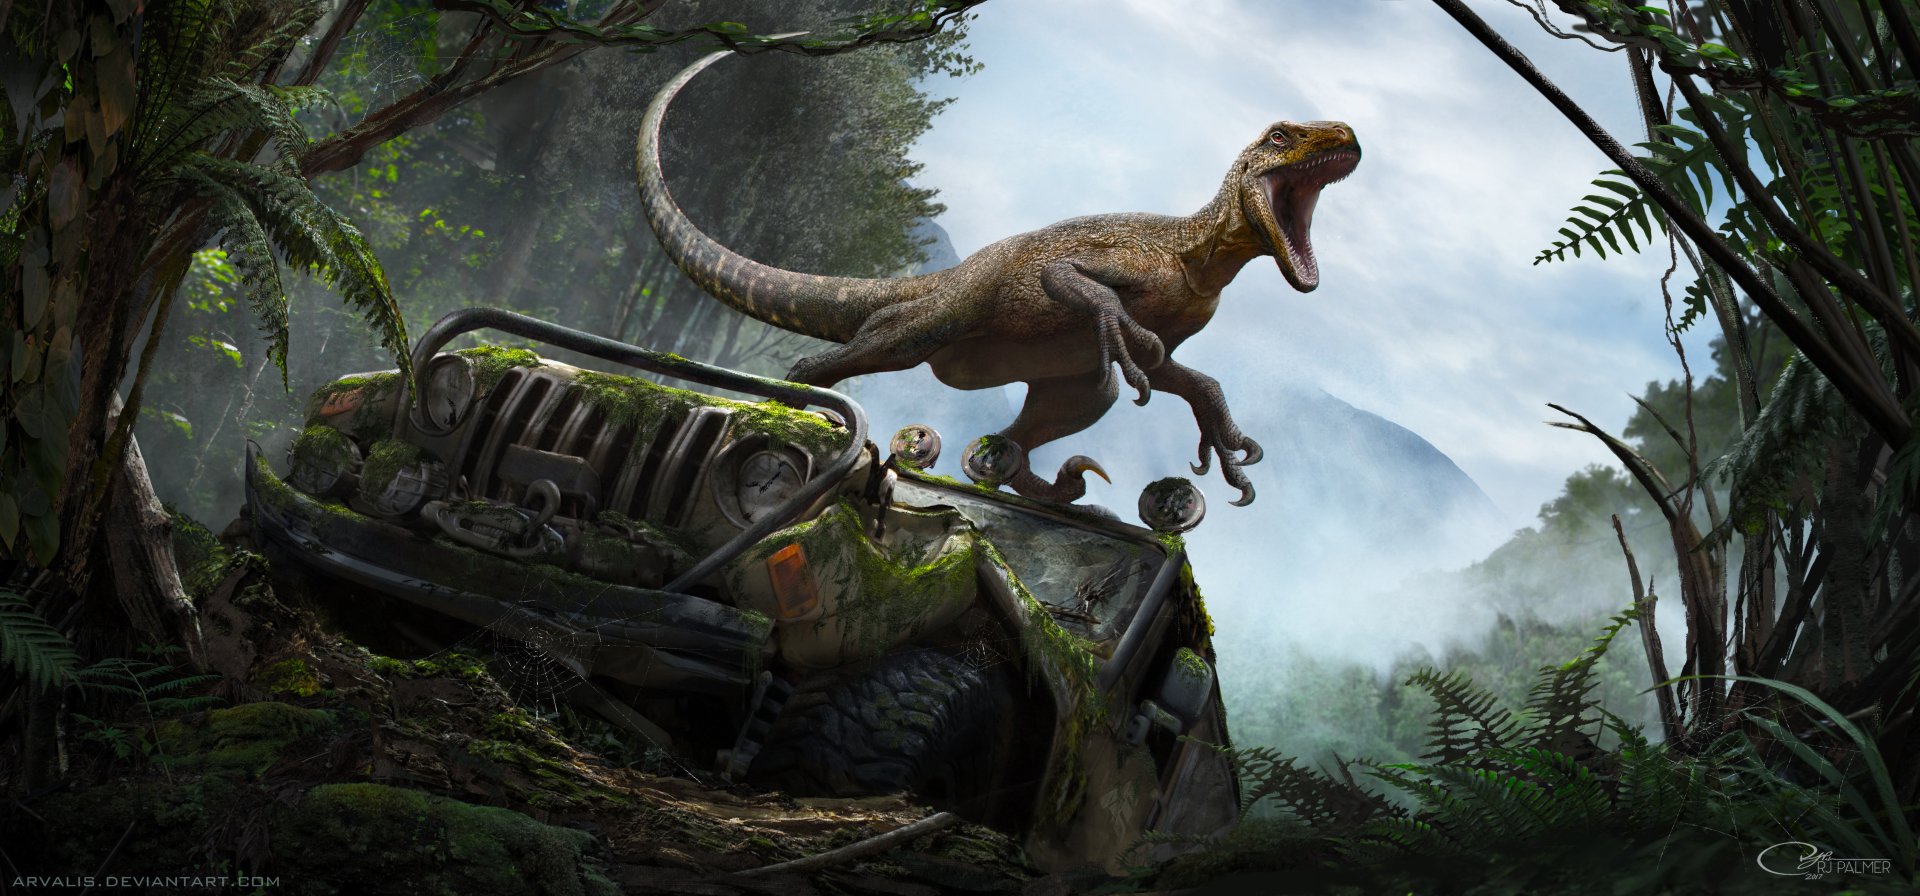 Animal Velociraptor 4k Ultra HD Wallpaper By Rj Palmer